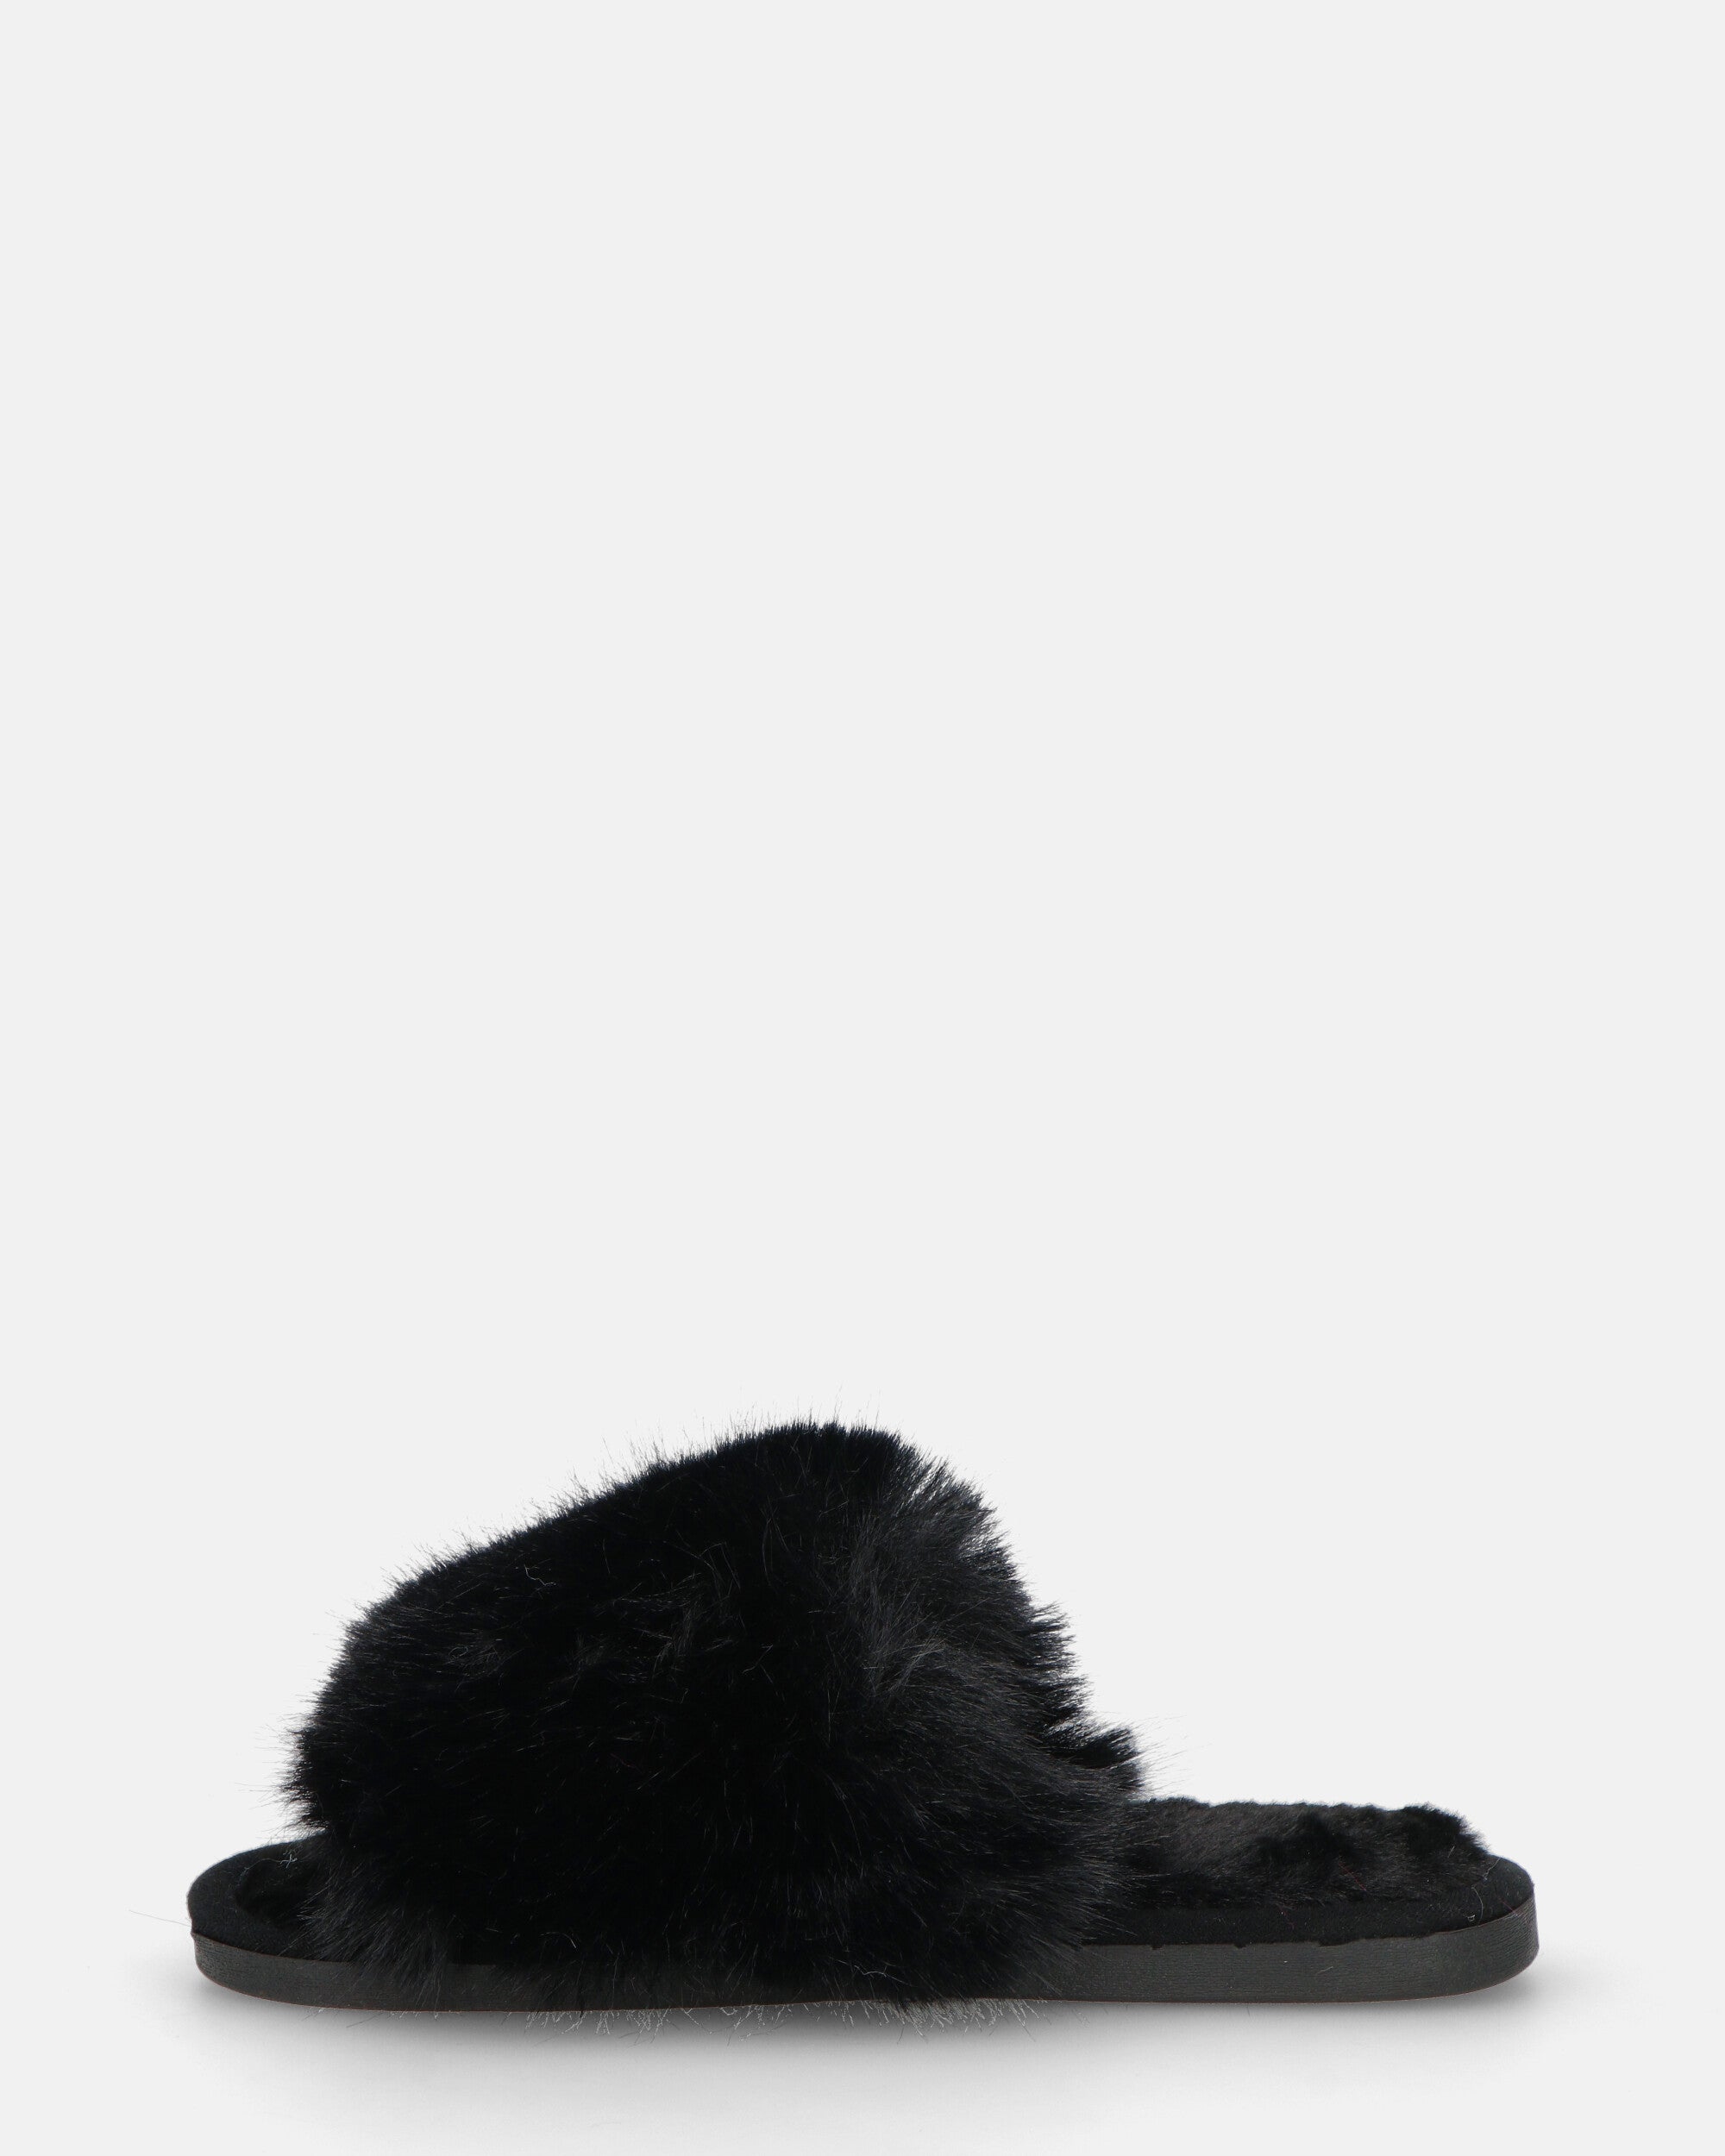 HAMA - black fur open toe slippers